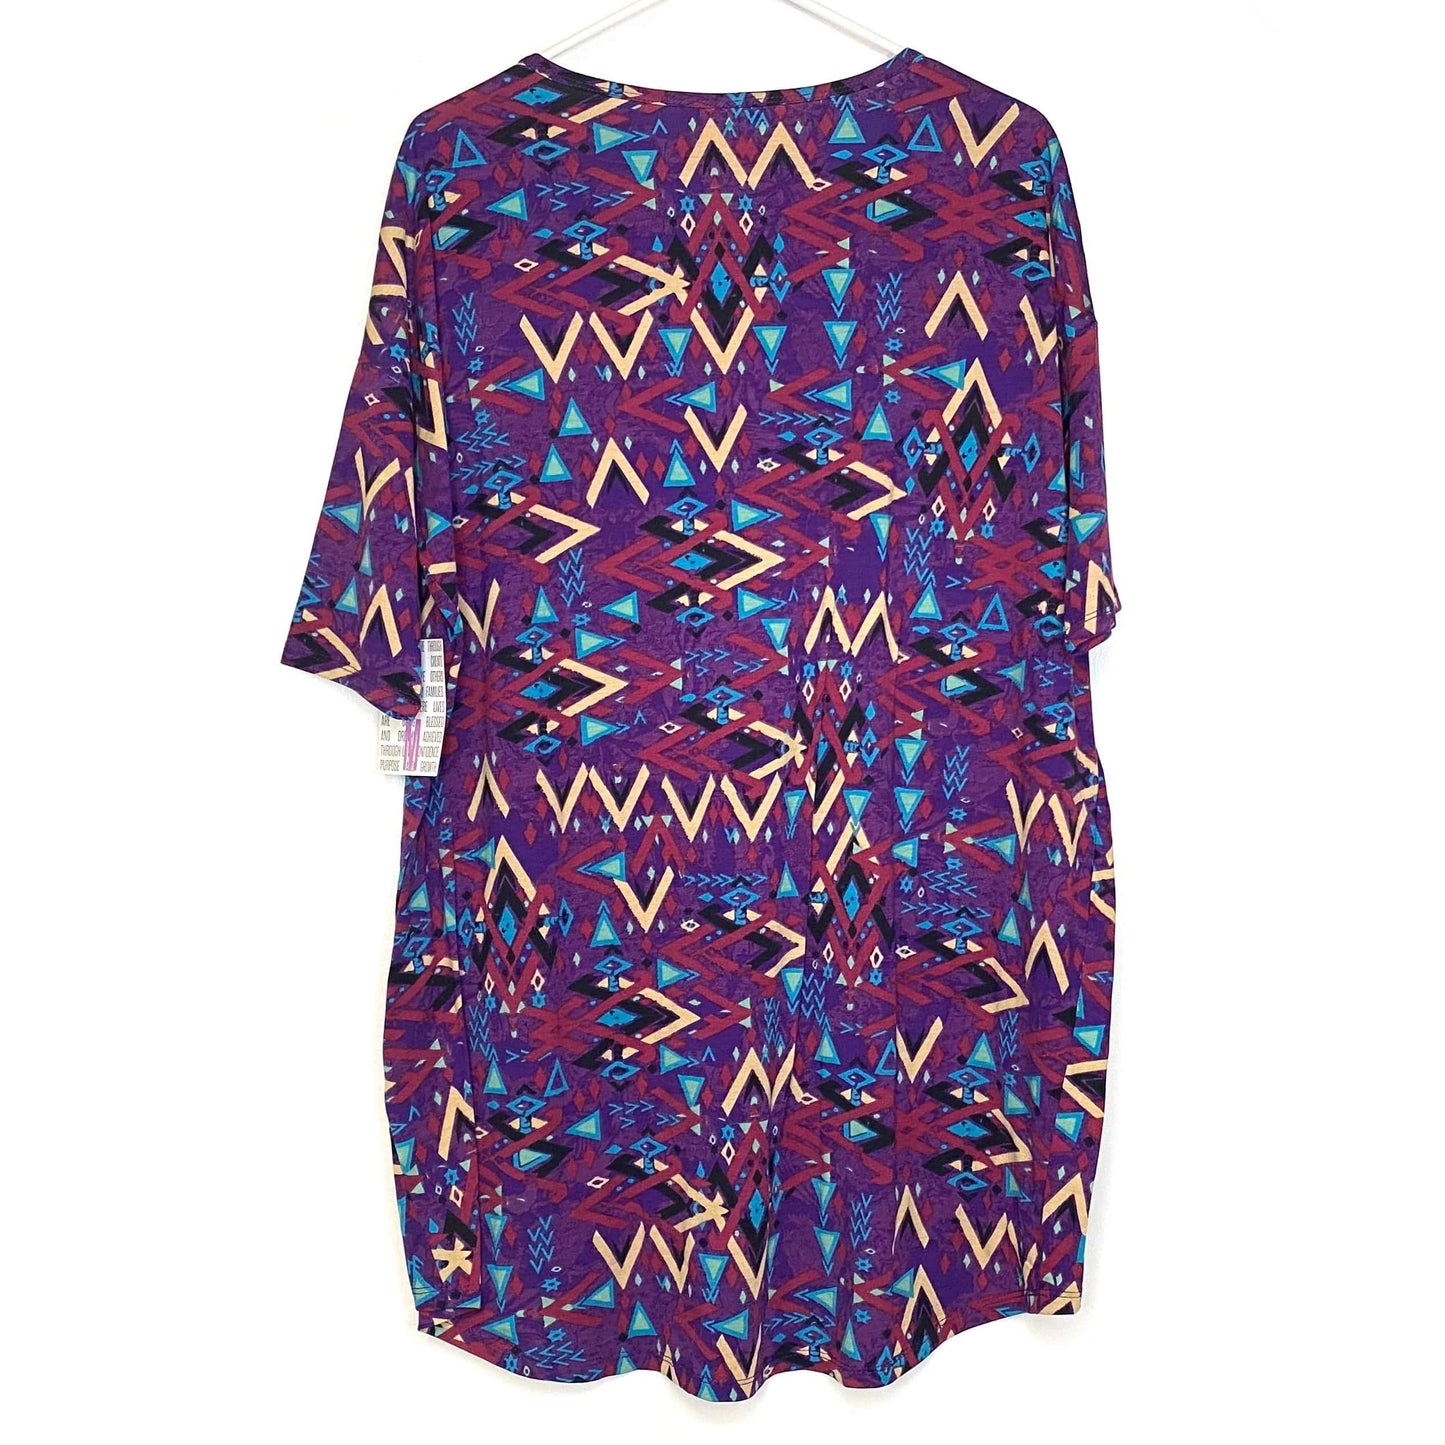 LuLaRoe Womens M Irma Multicolor/Purple Abstract Pattern S/s Tunic Top NWT